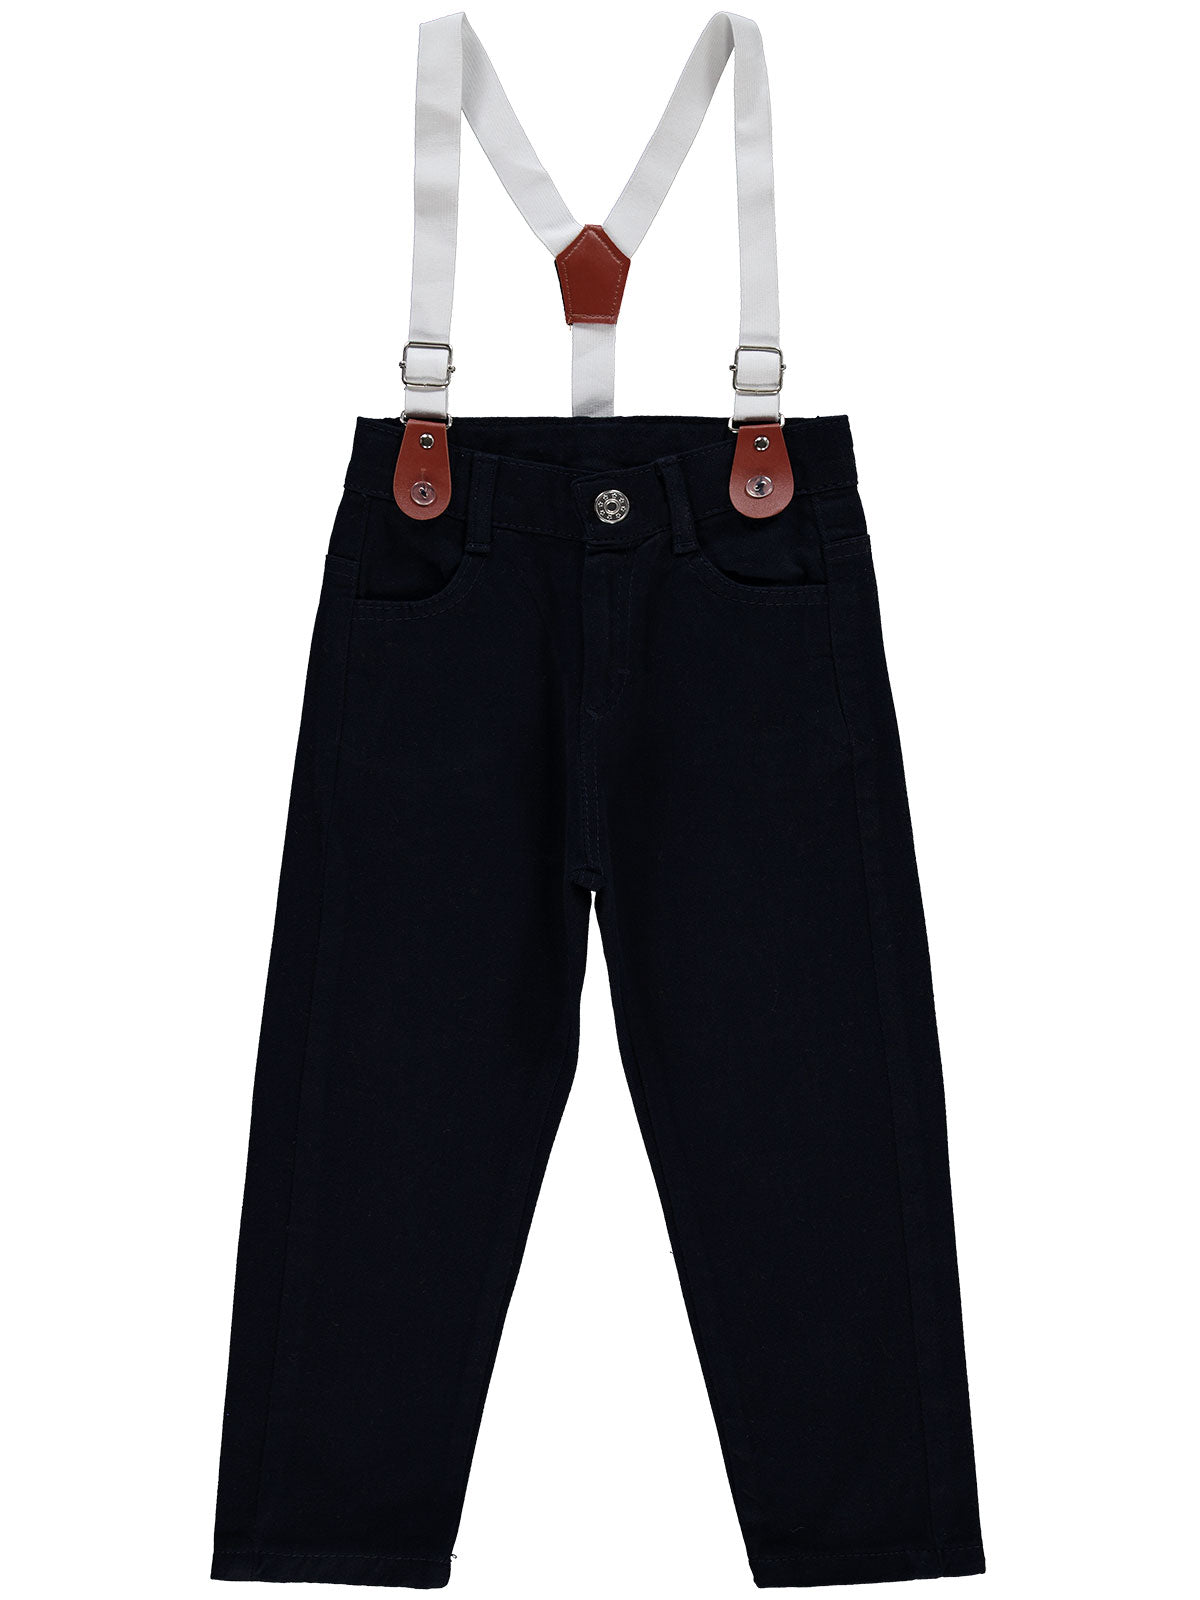 Pantaloni cu bretele Strap Style bleumarin